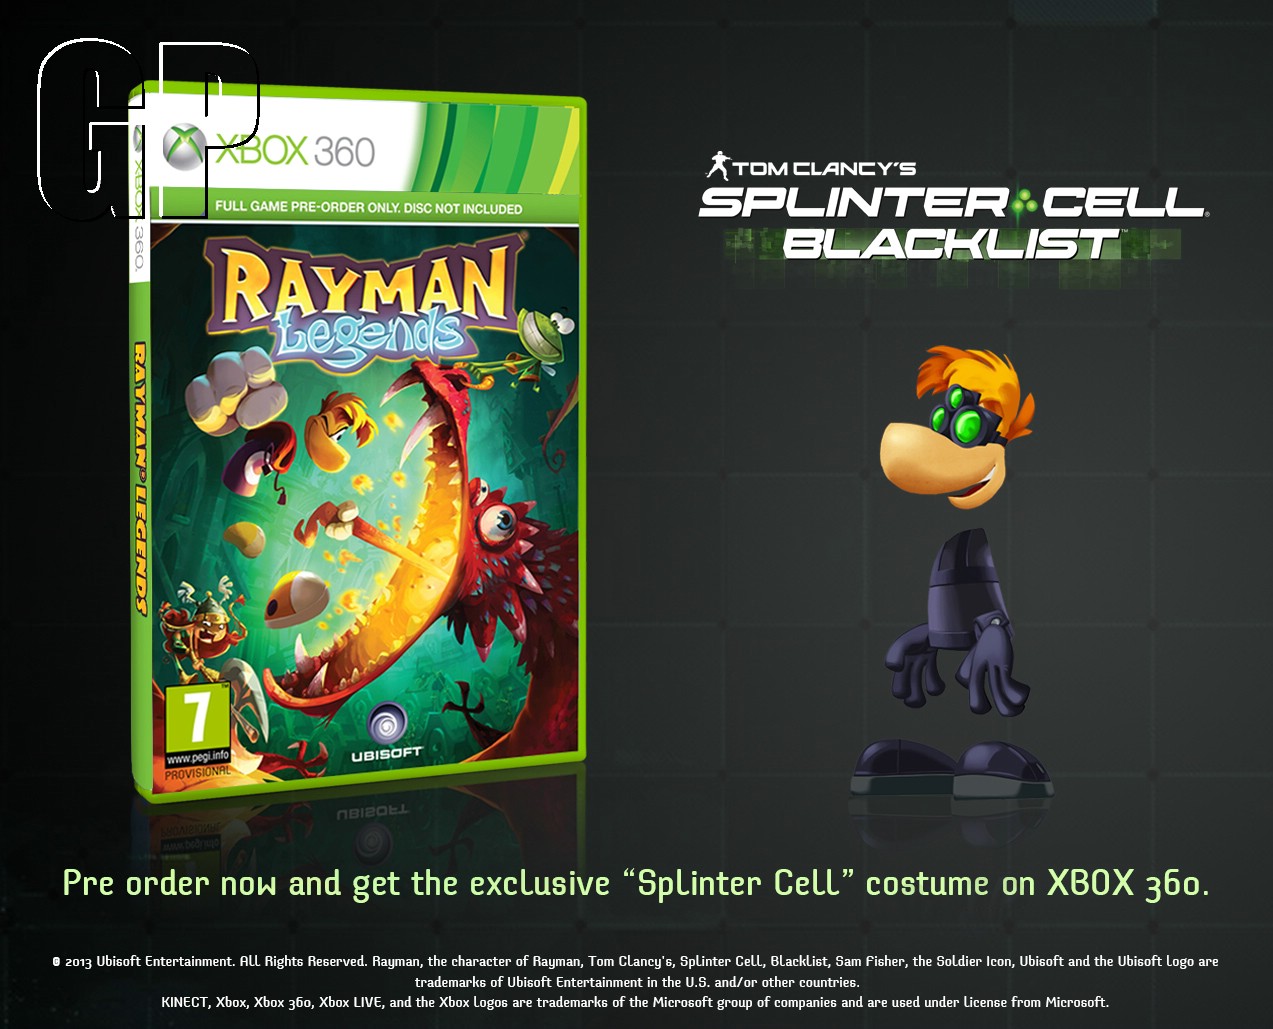 Anunciado jogo mobile de Rayman